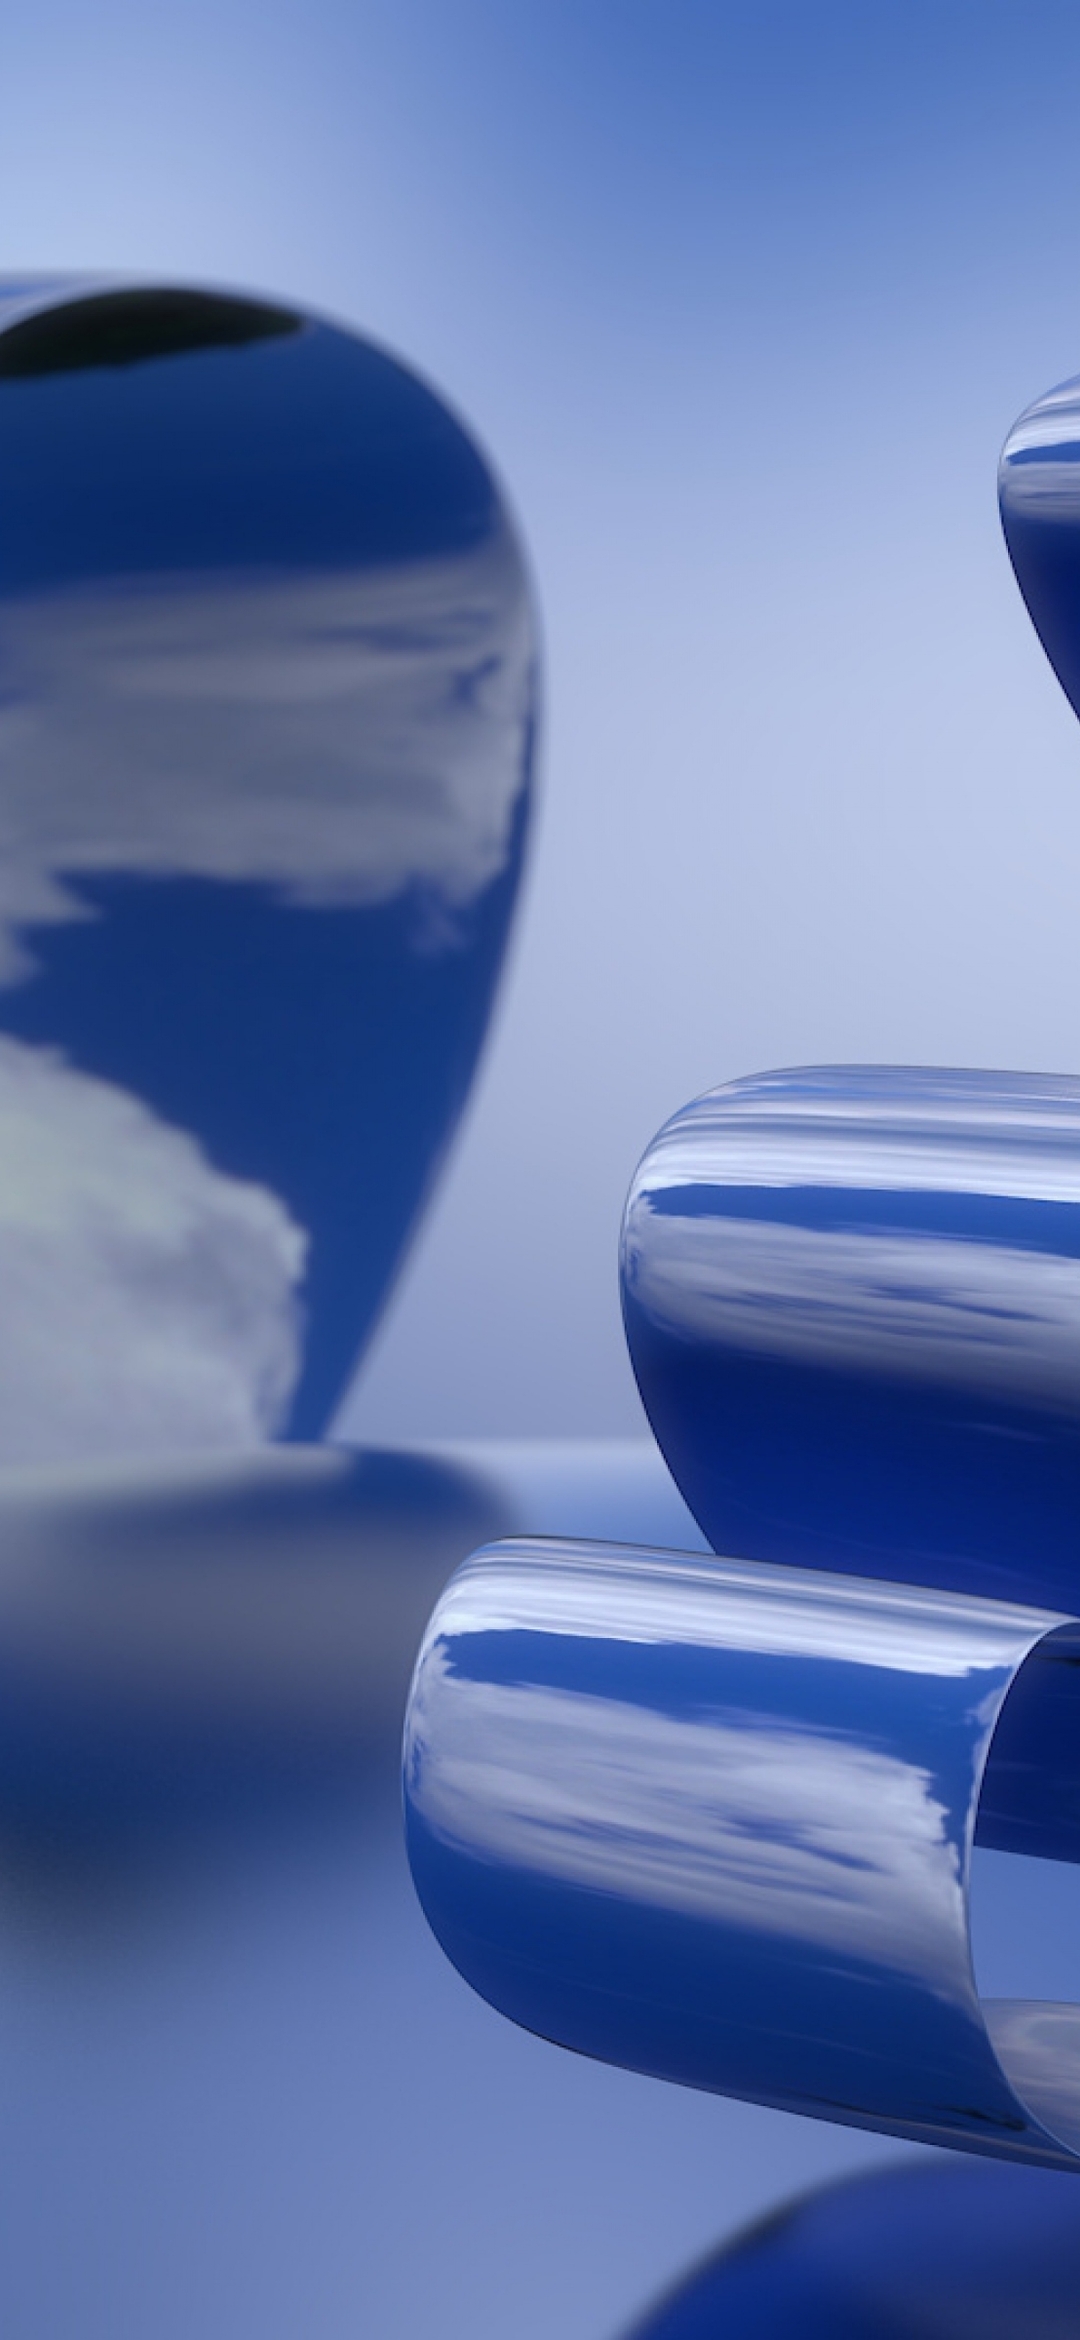 Image: Tape, reflection, blue, bend